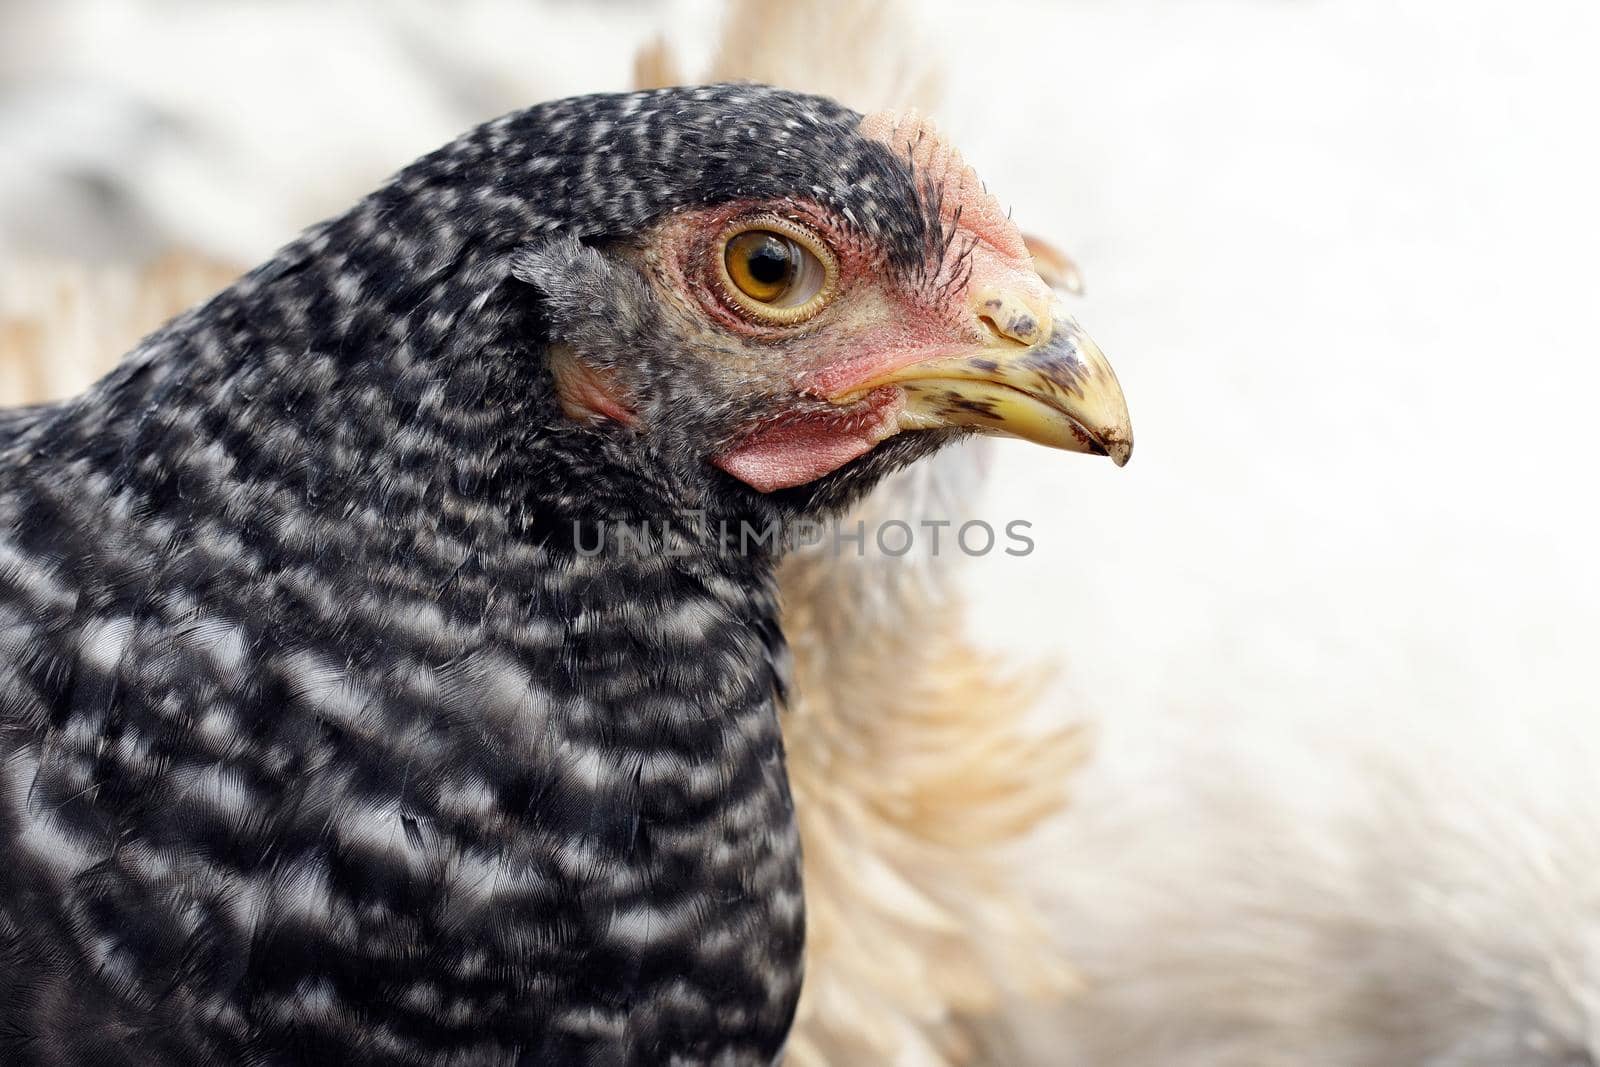 Closeup close up detail of speckled hen chicken head. by Lincikas